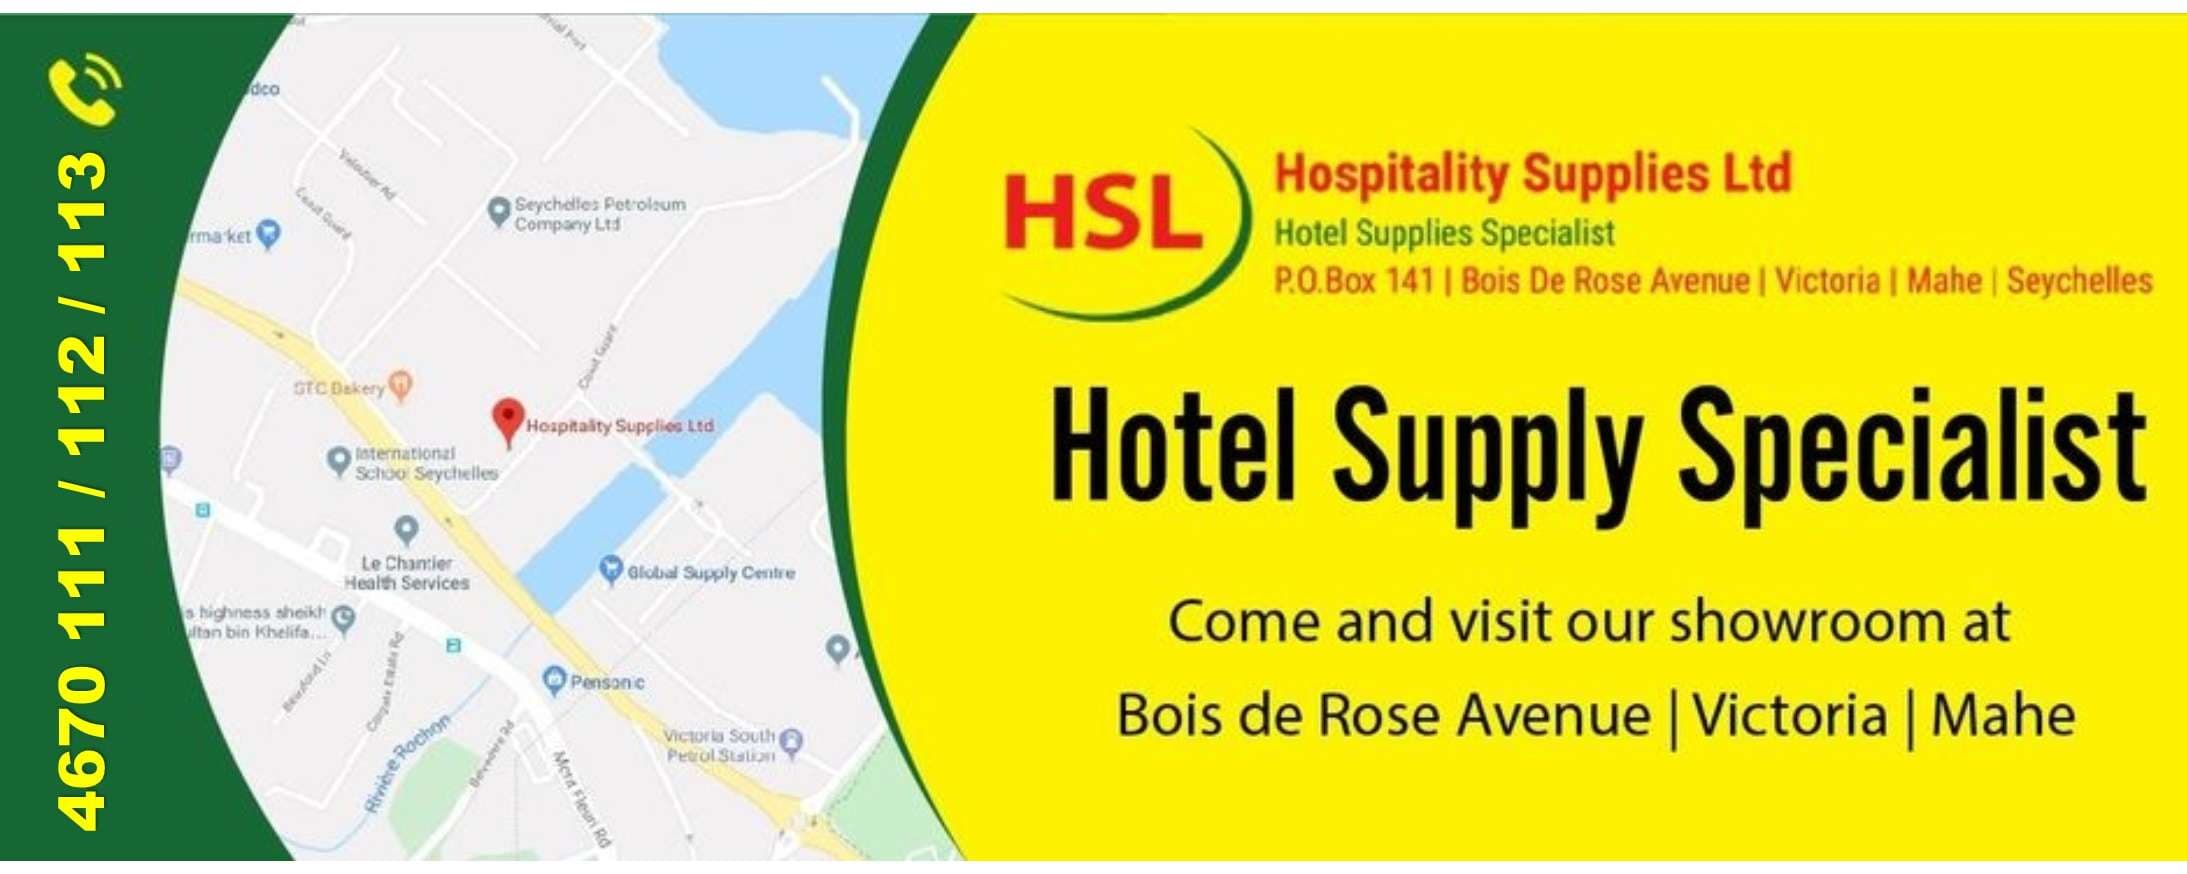 Hospitality Supplies Ltd - HSL